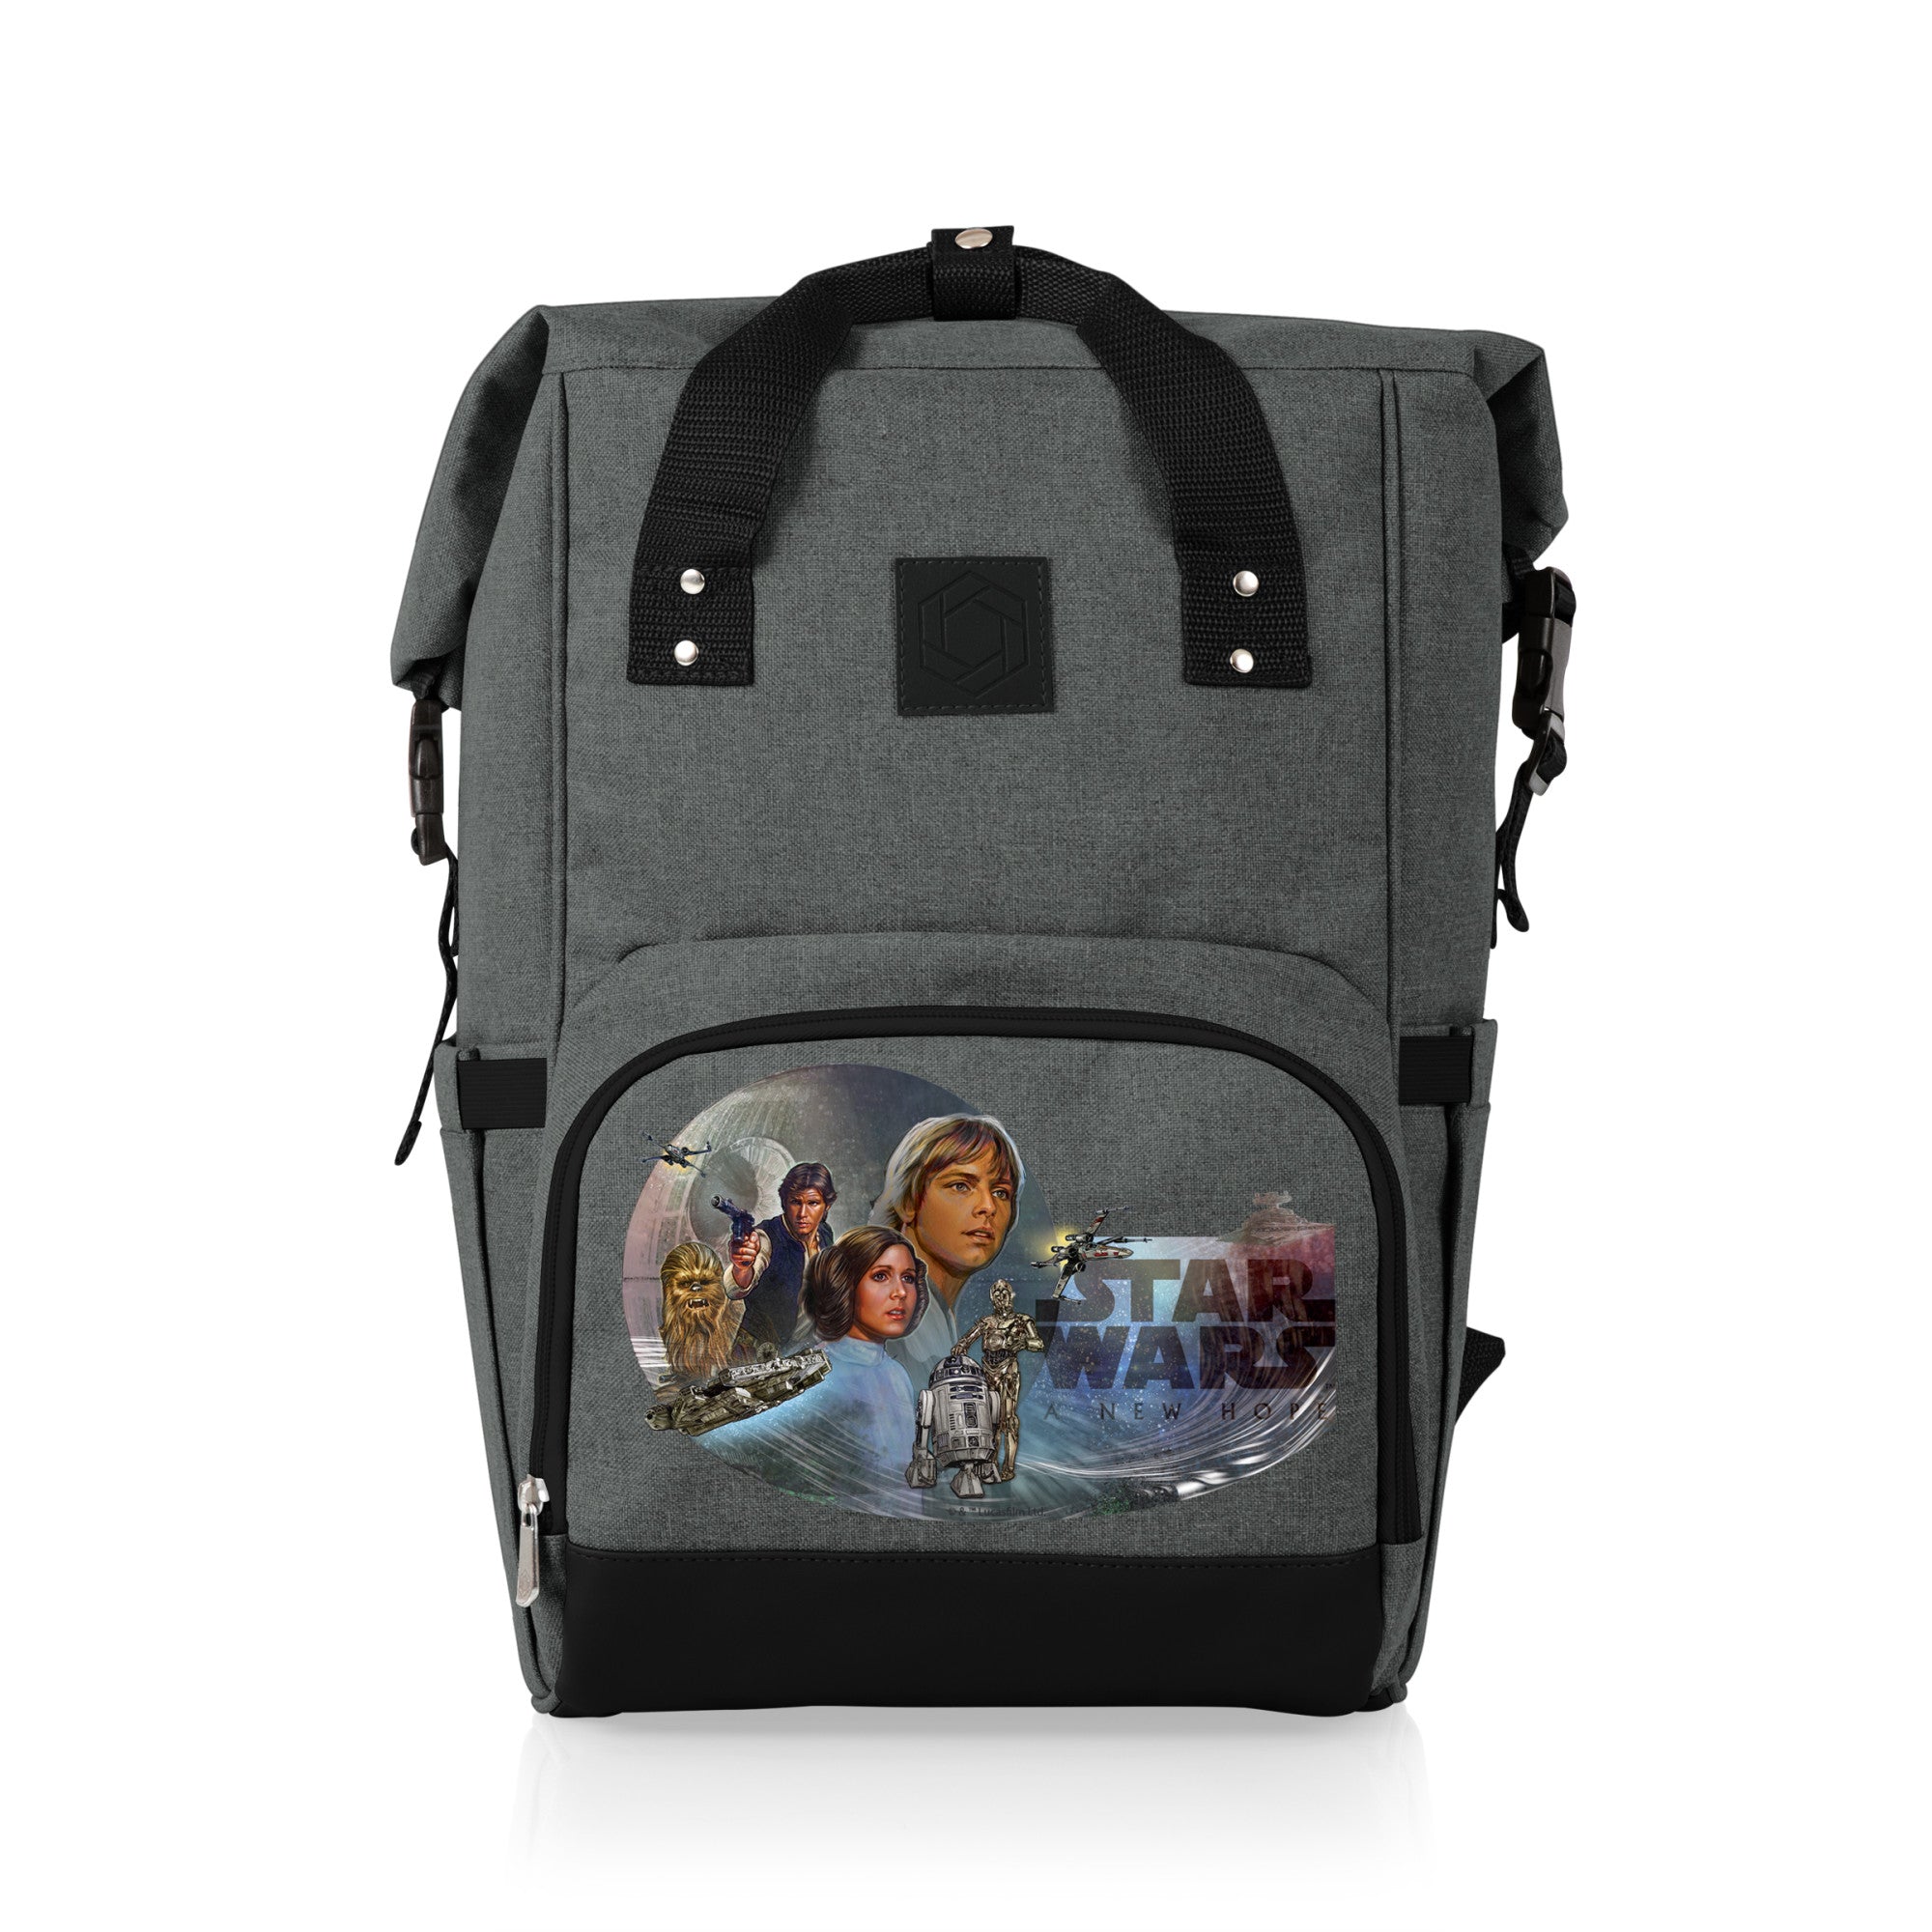 Star Wars Celebration - On The Go Roll-Top Backpack Cooler